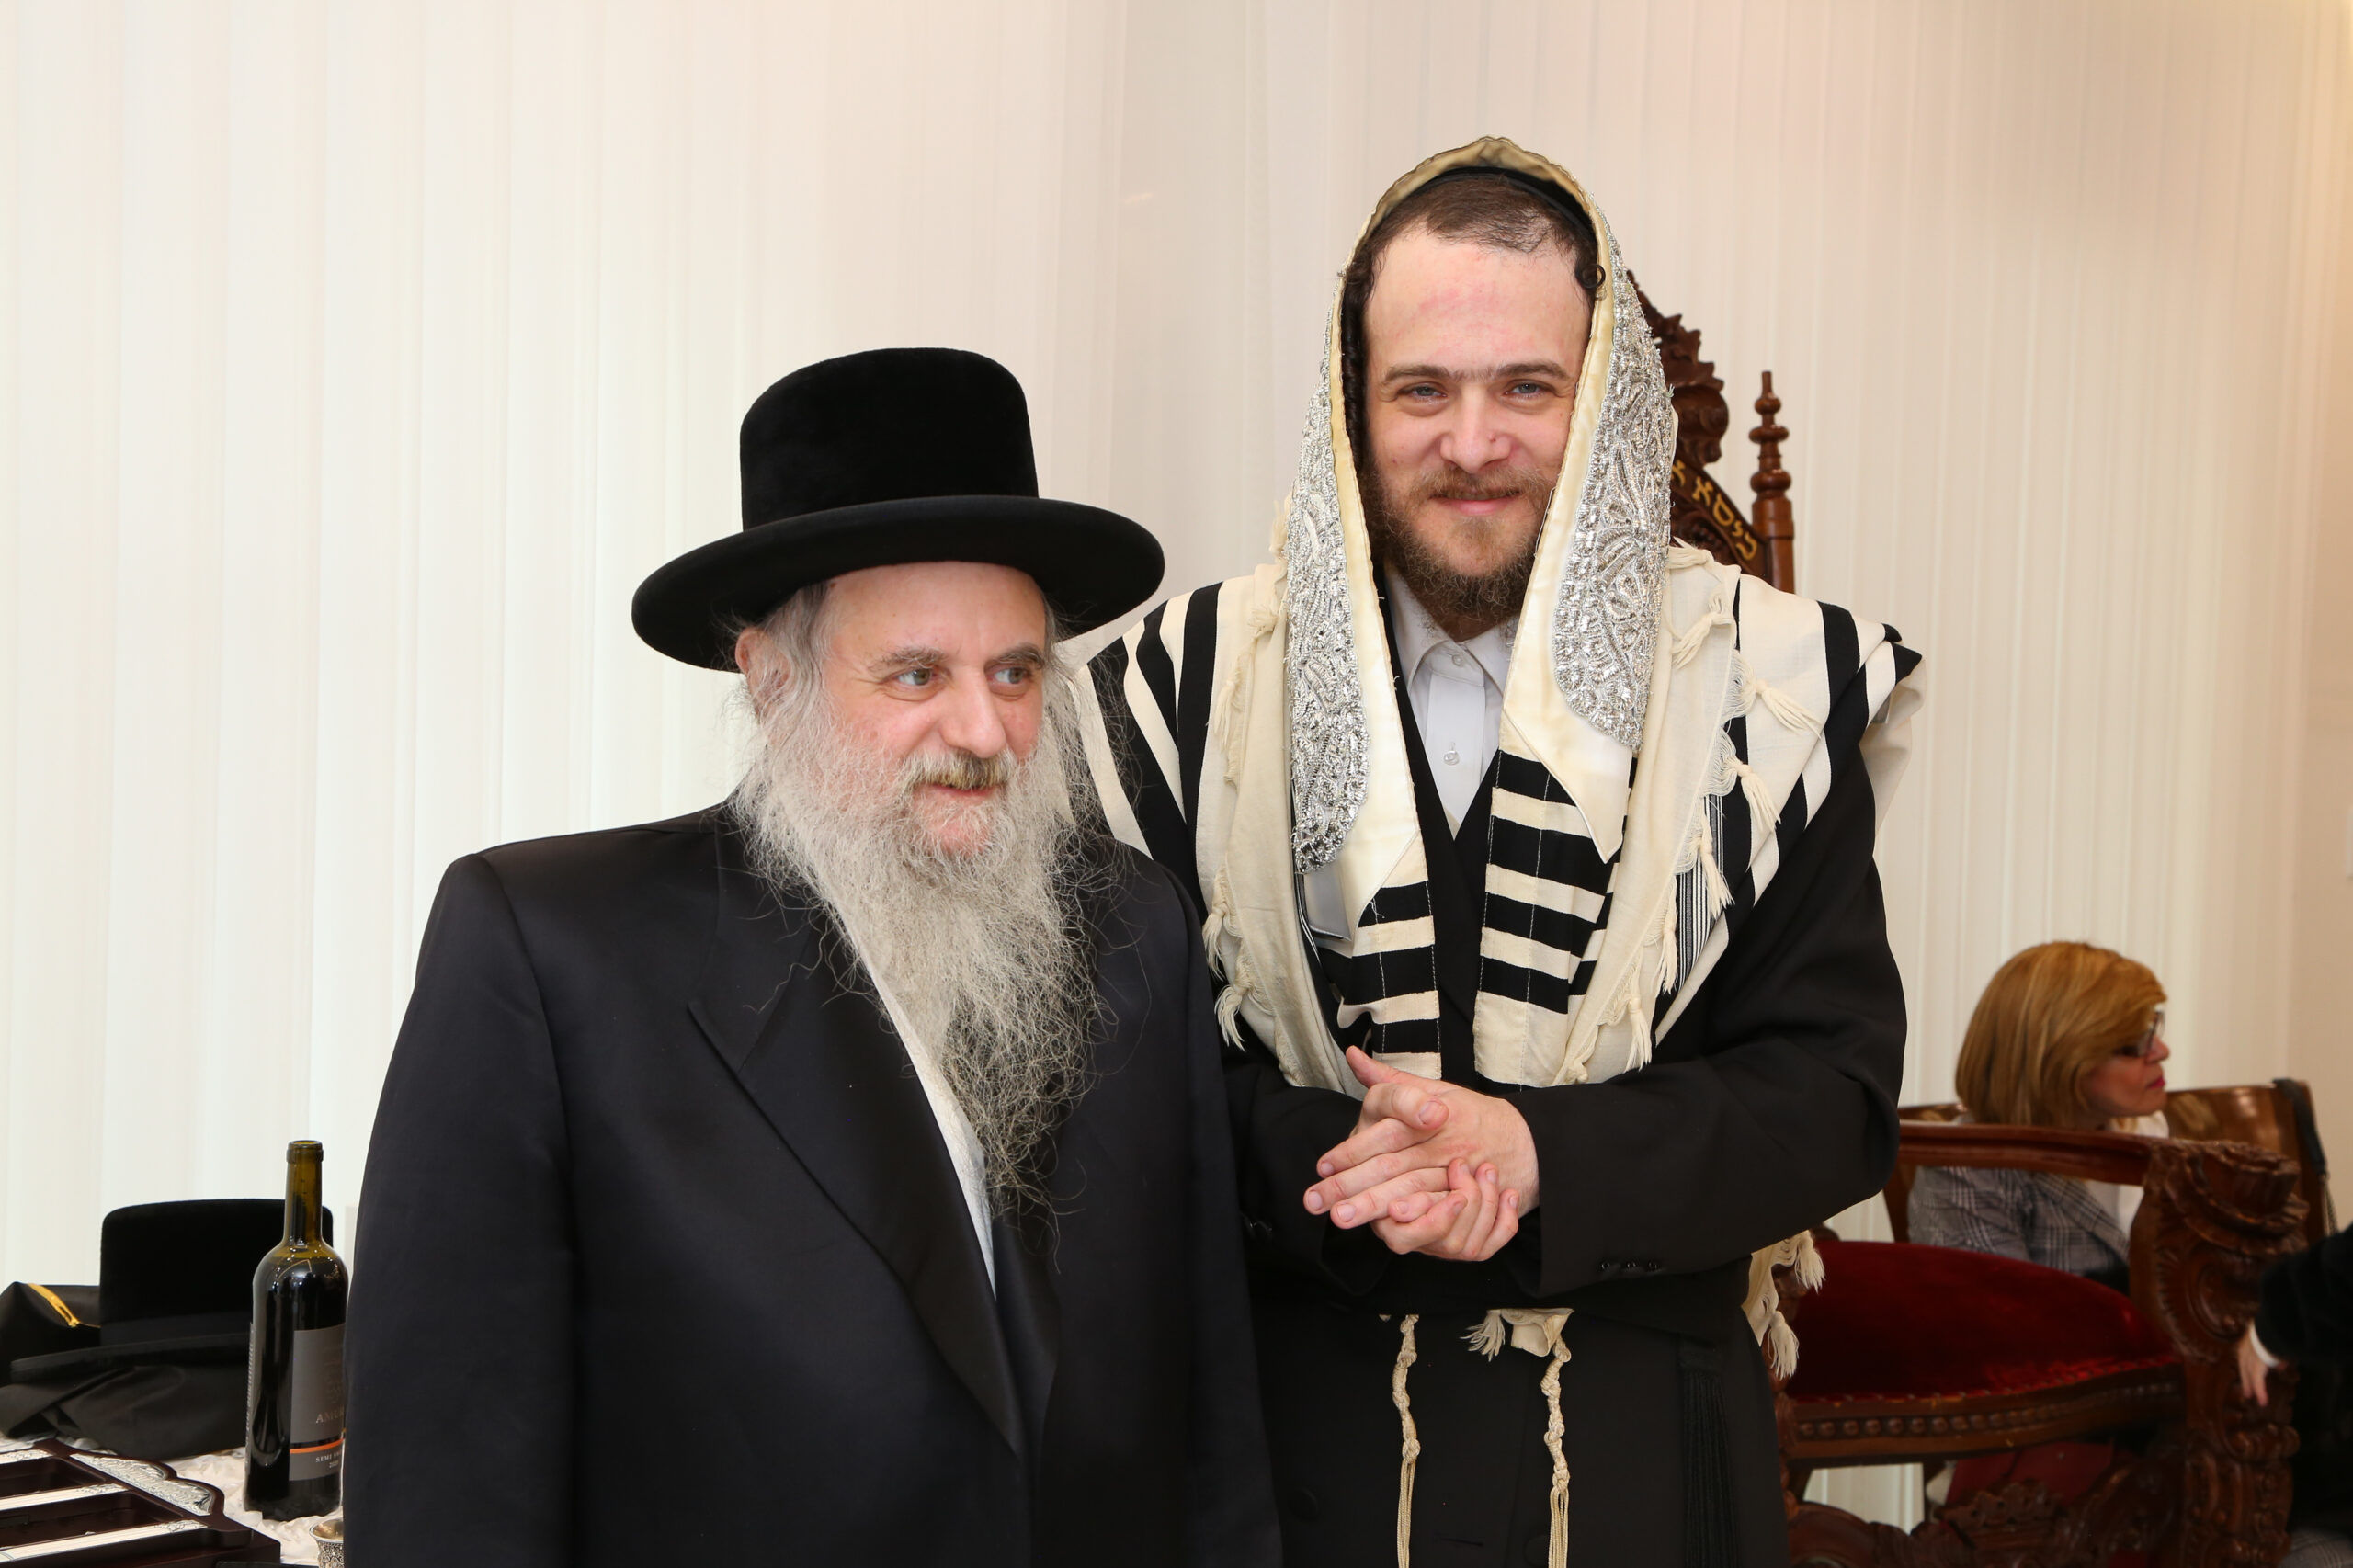 Mohel Rabbi Avrohom Rabinowitz